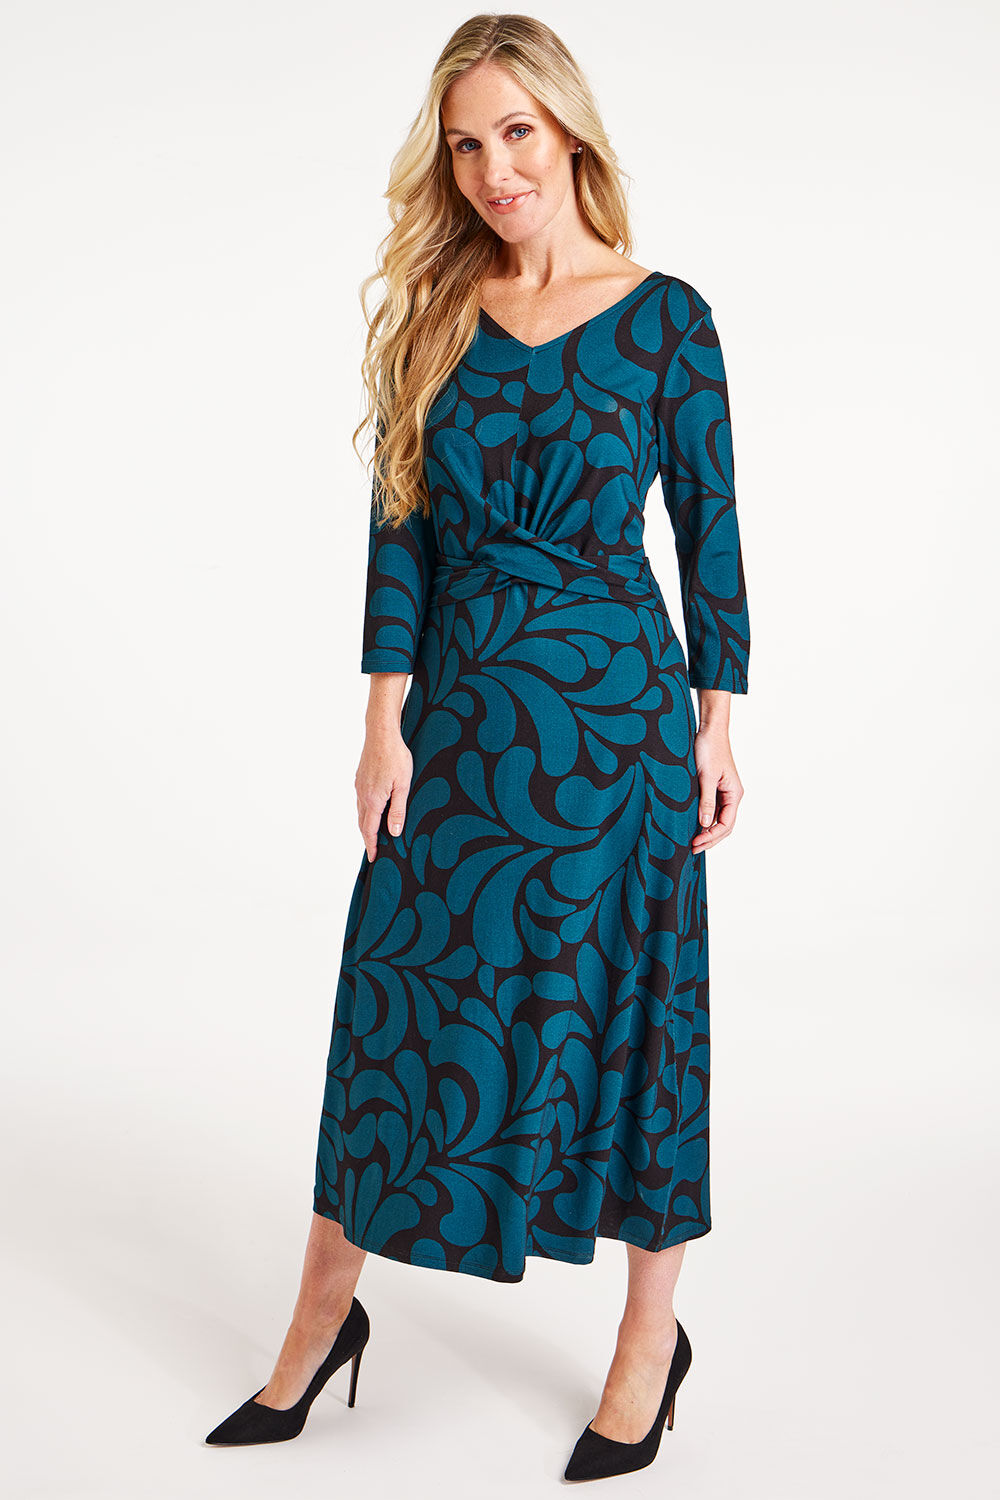 Bonmarche Women’s Green and Black Viscose Swirl Print Twist Front Jersey Dress, Size: 10